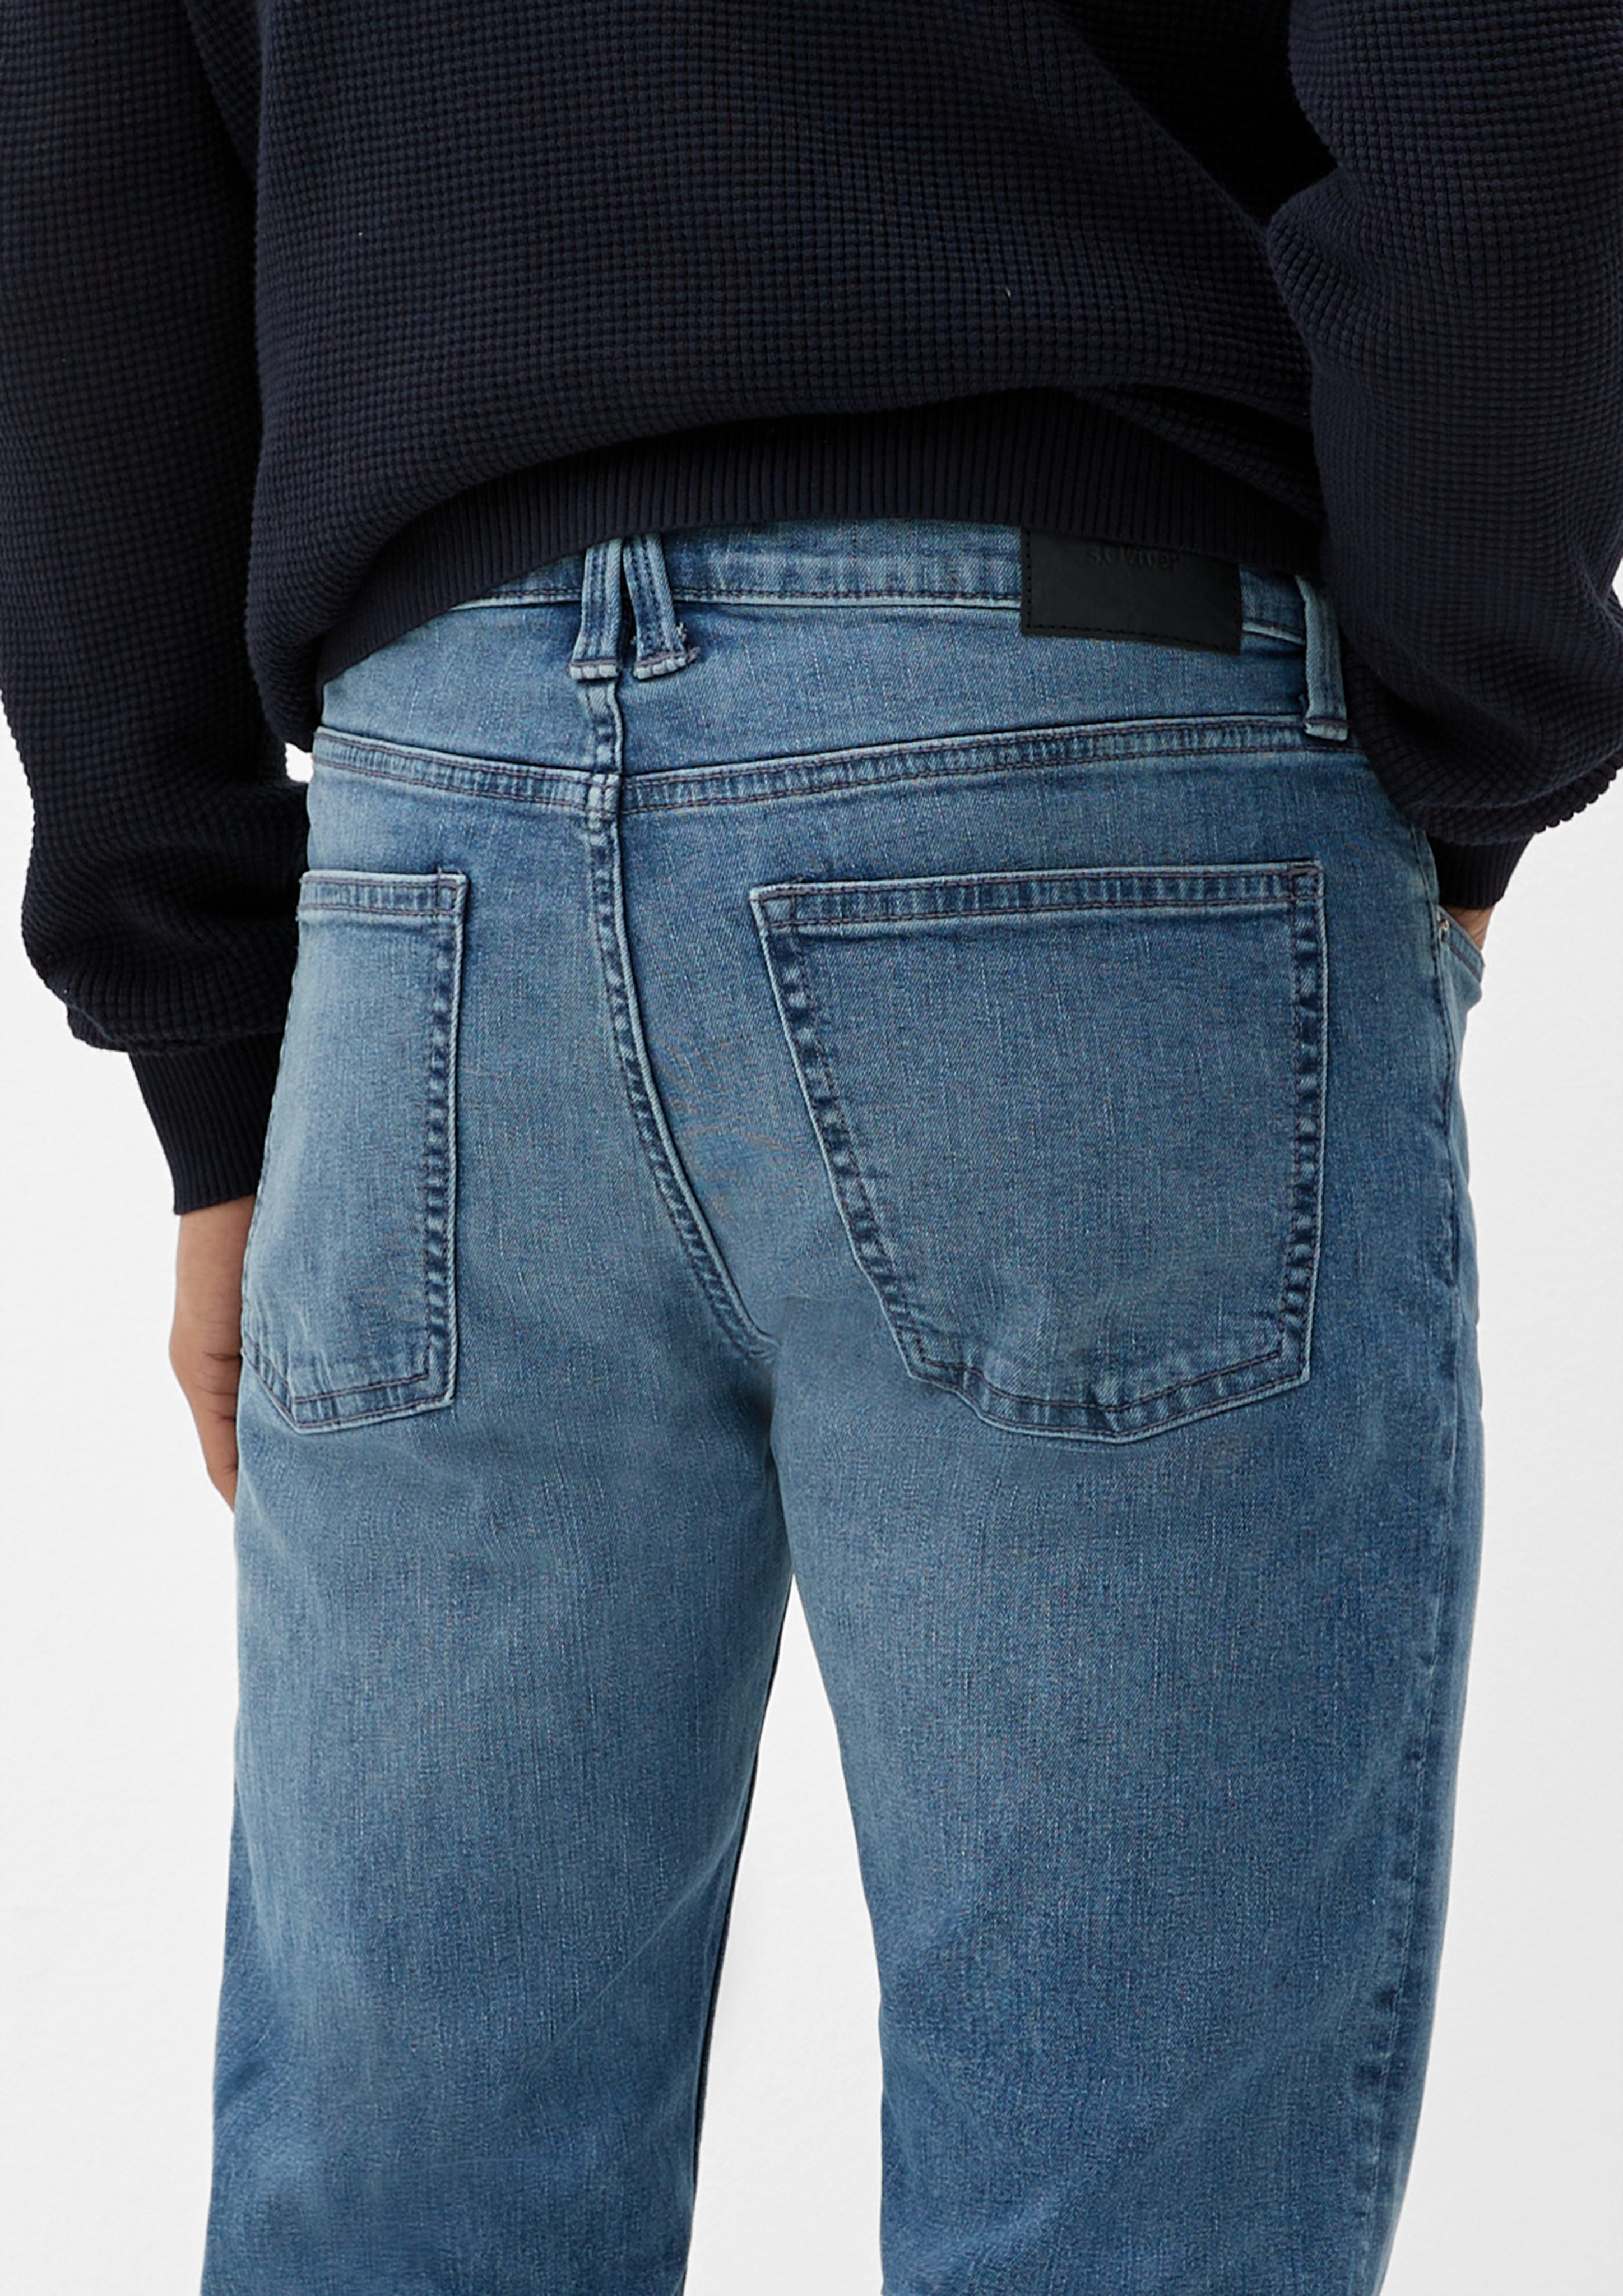 s.Oliver / / Waschung Stoffhose Leg Slim Jeans / Fit hellblau Rise Nelio Mid Slim